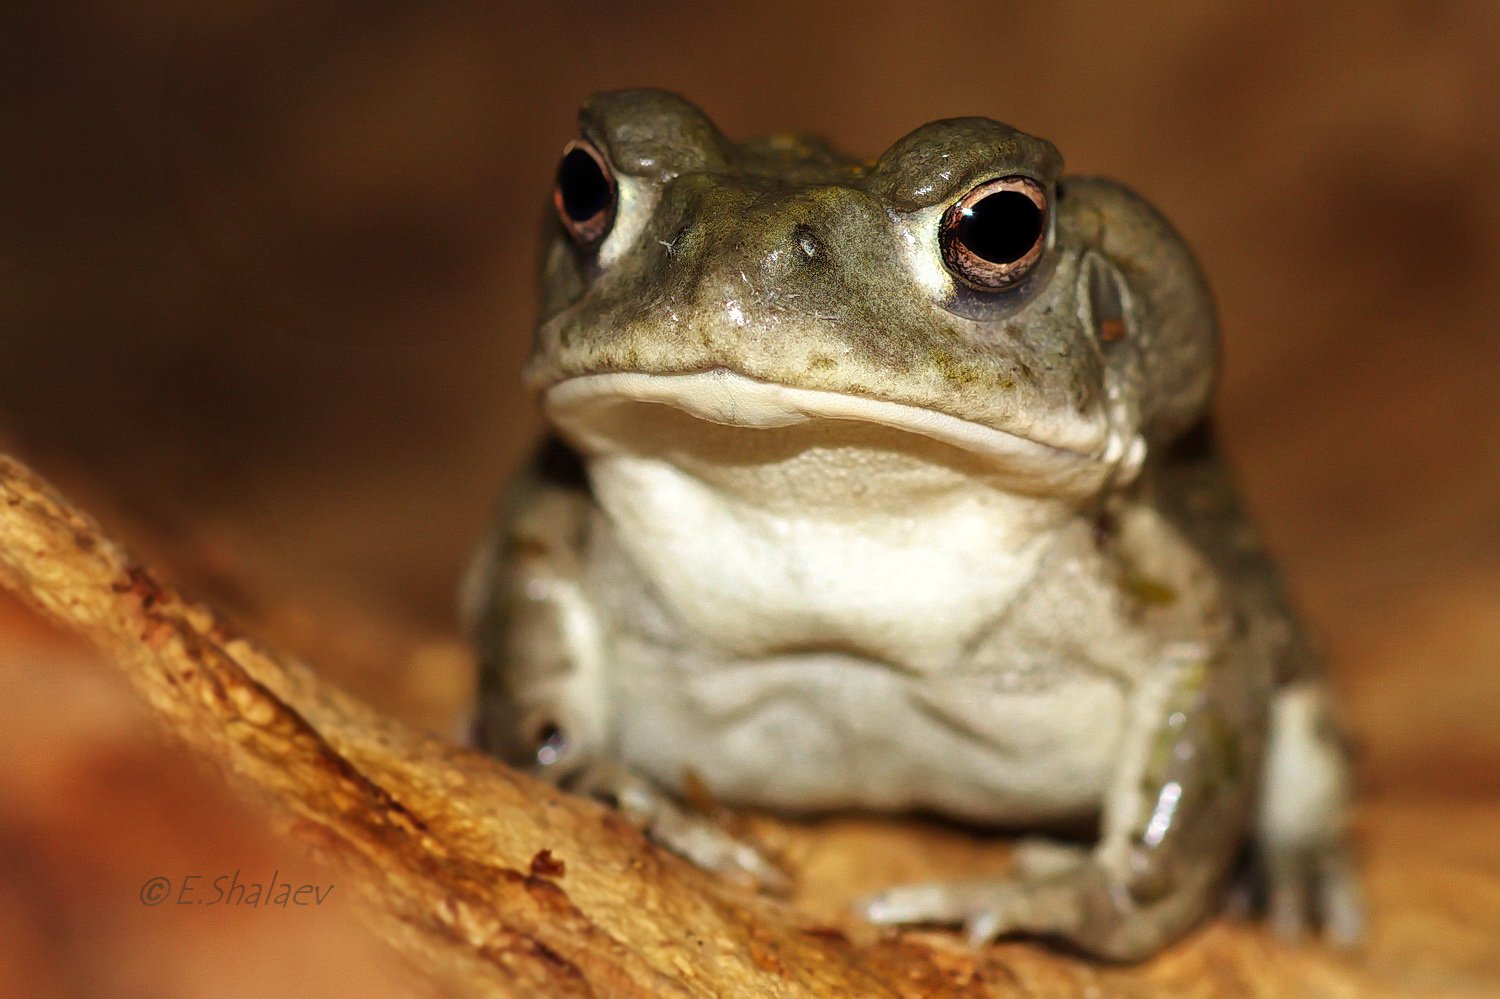 Bufo alvarius, Colorado River toad, Амфибии, Жаба, Жаба колорадская, Лягушка, Евгений